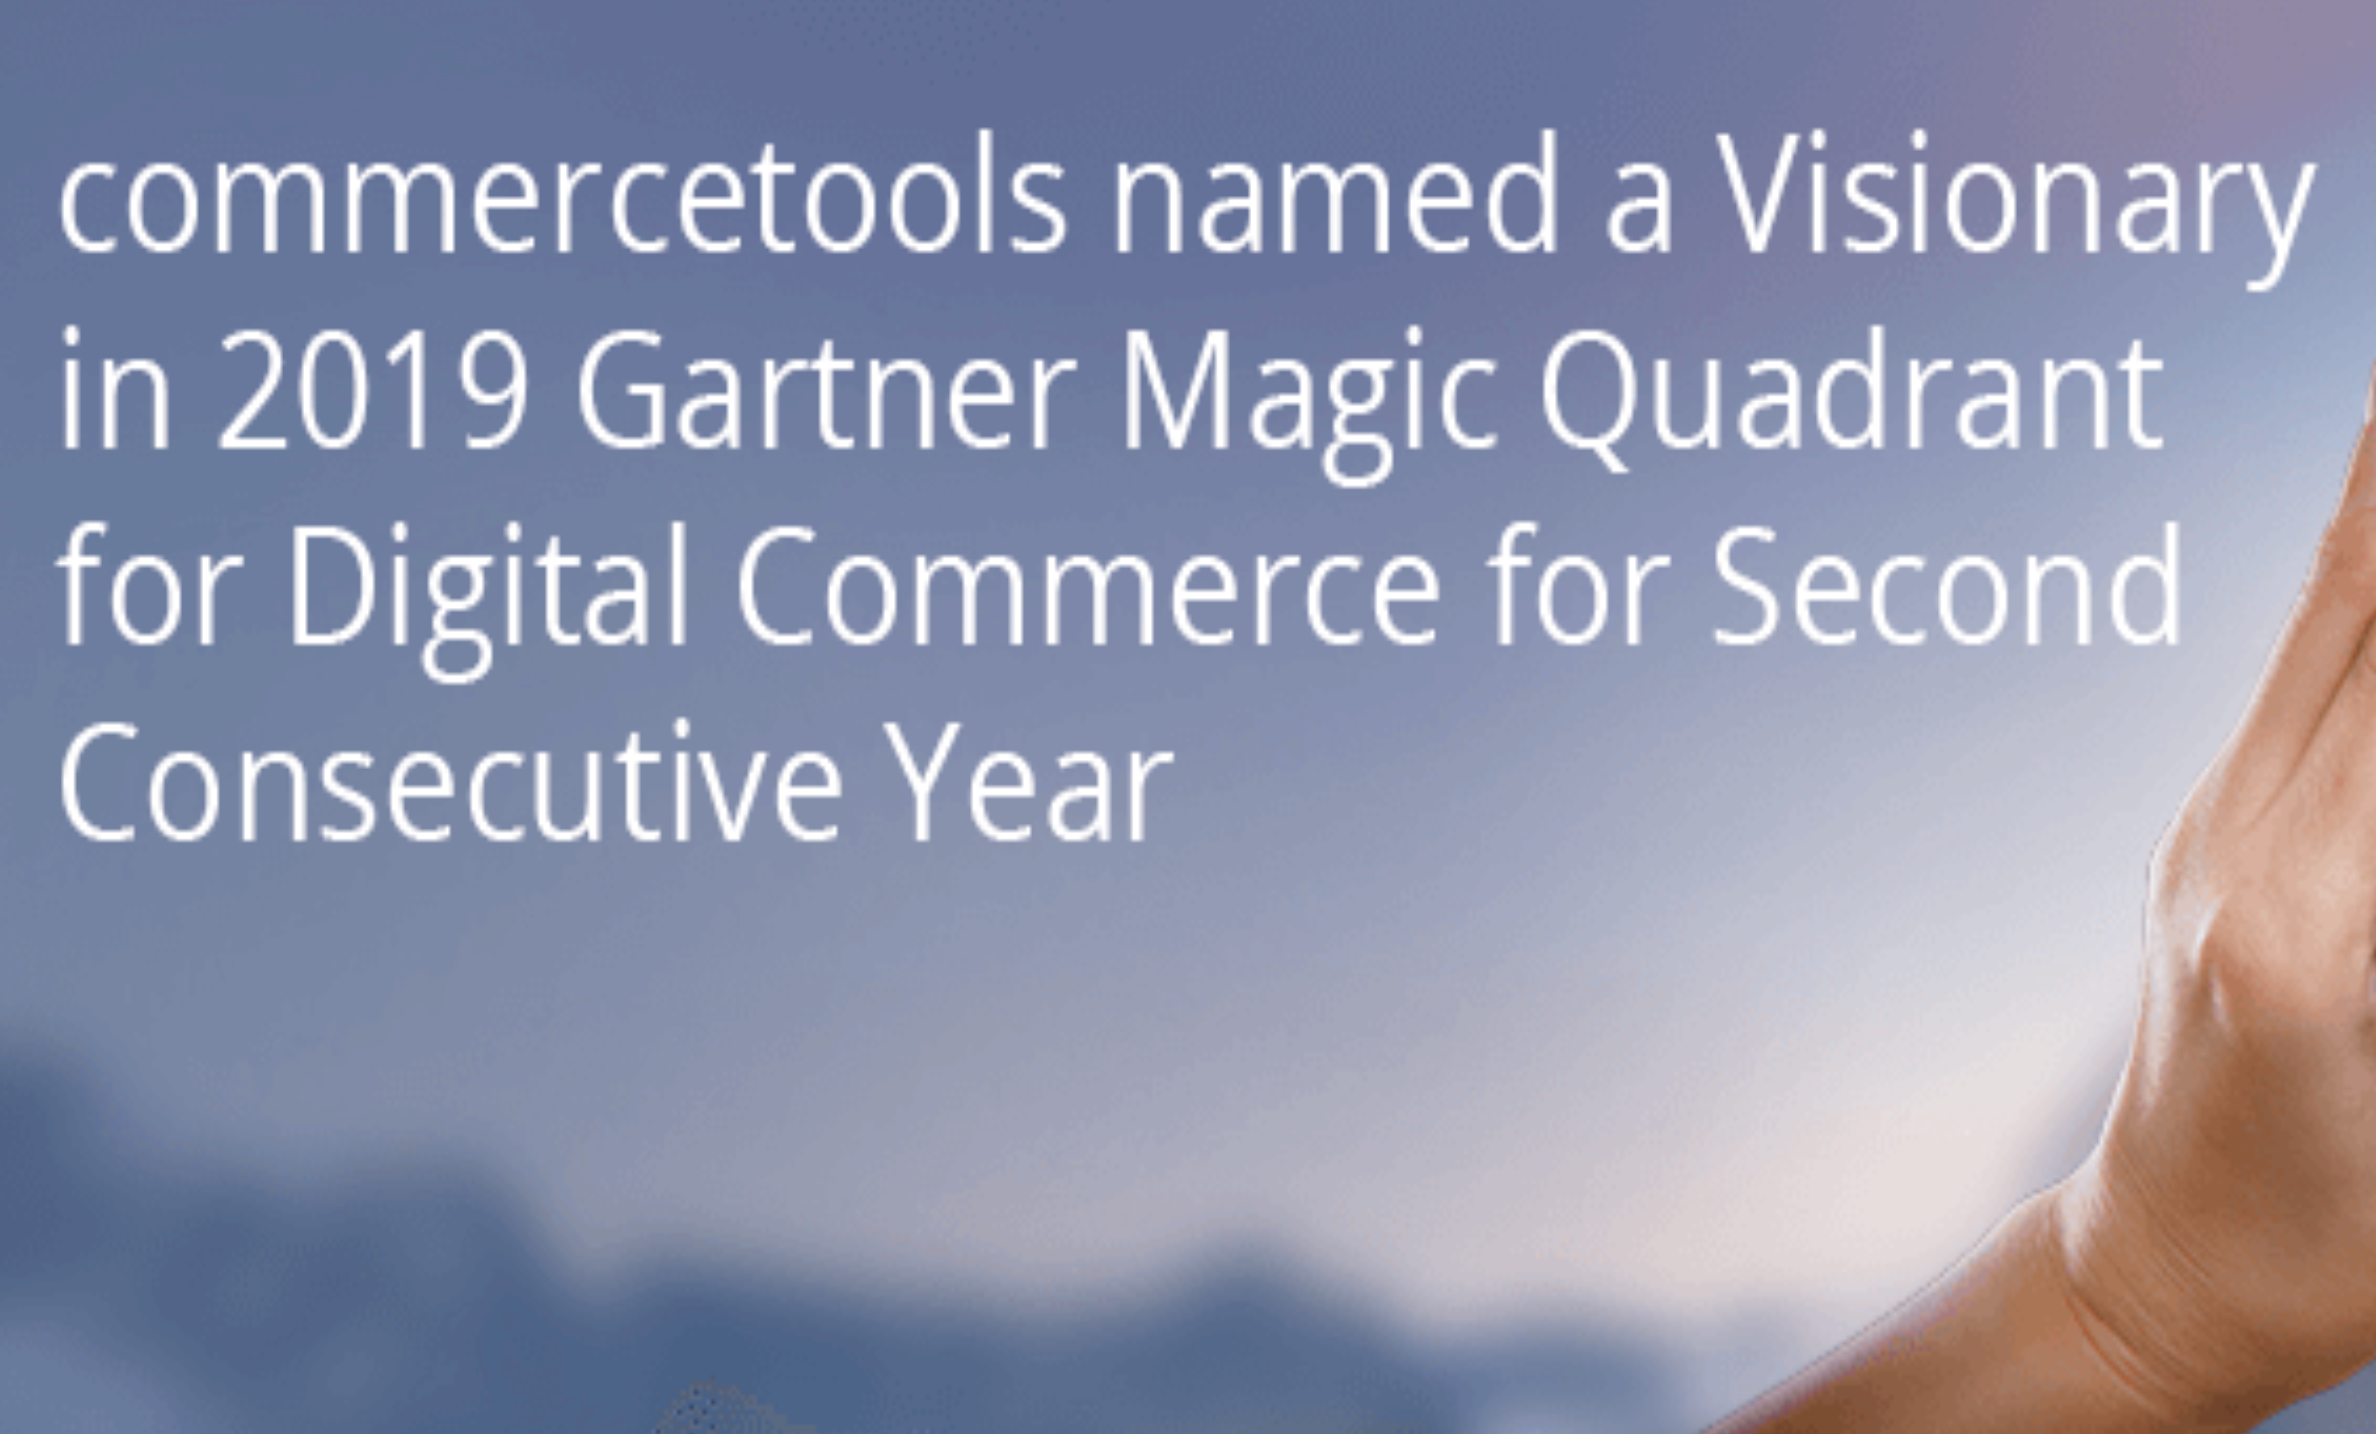 commercetools named a Visionary in the Gartner Magic Quadrant 2019